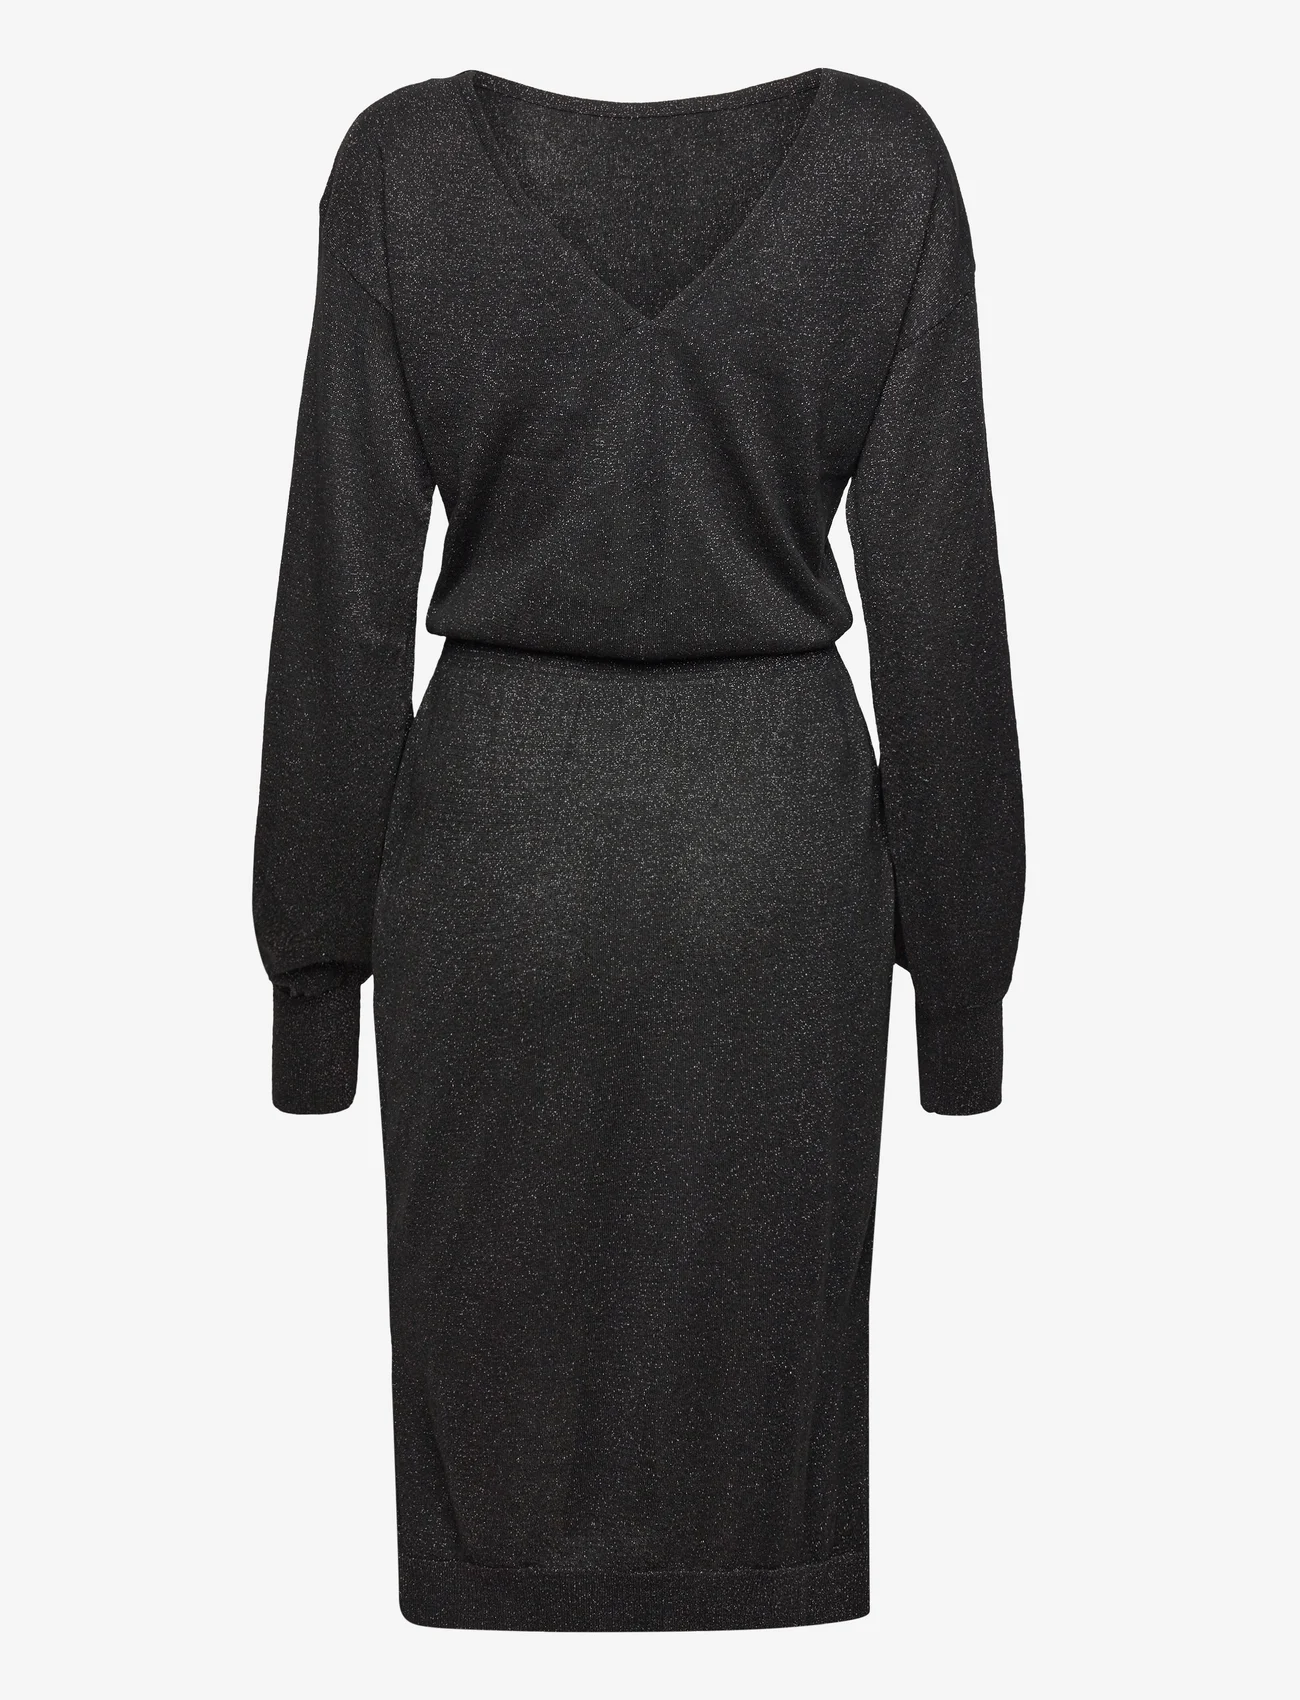 Tamaris Apparel - CERET Knit Dress - gebreide jurken - black beauty - 1